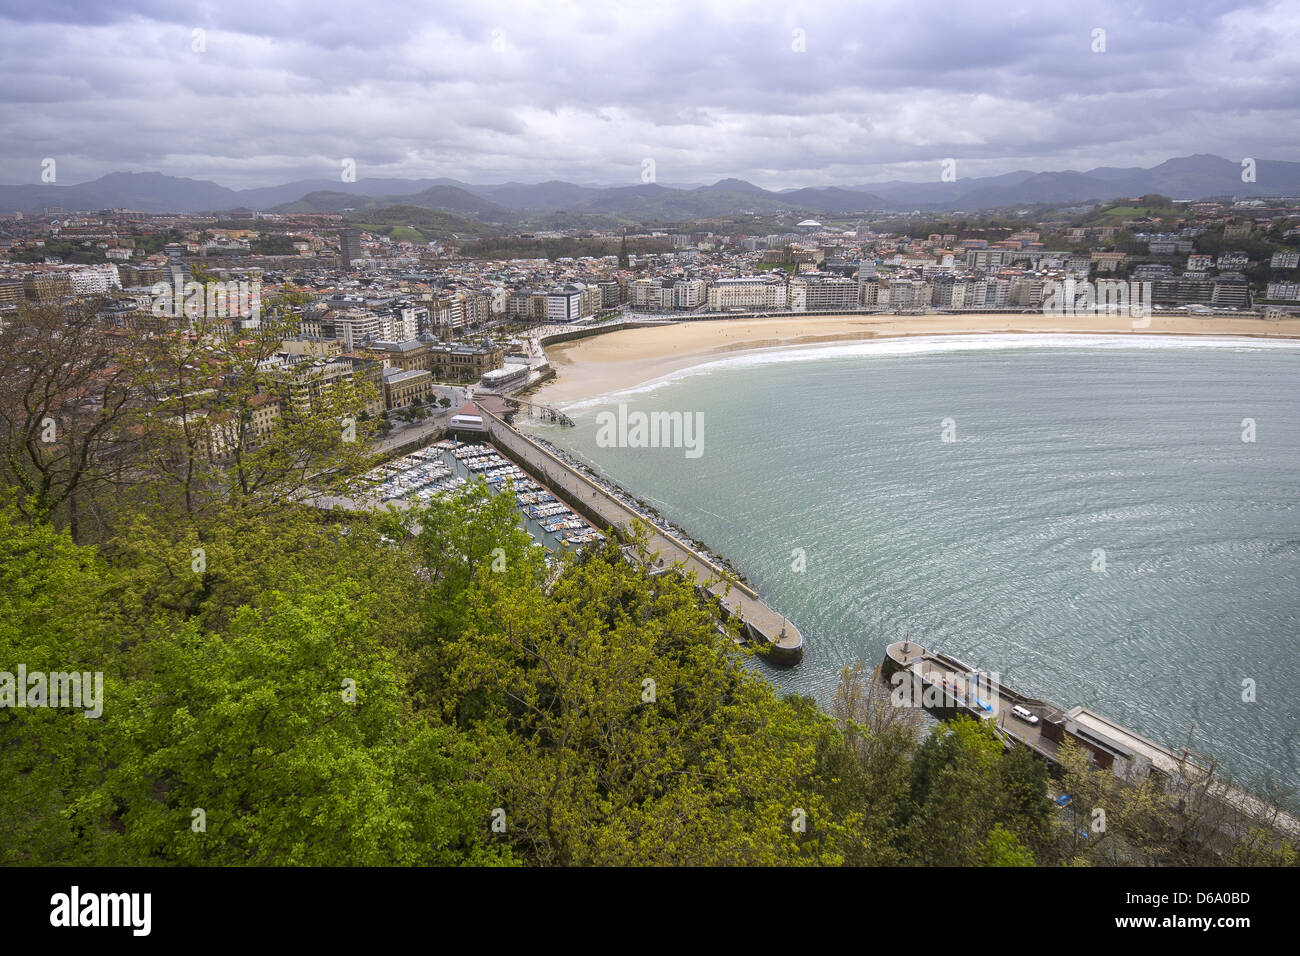 View from Mount Urgull looking over Playa de la Concha in San Sebastián, Donostia, Basque Country, Spain Stock Photo